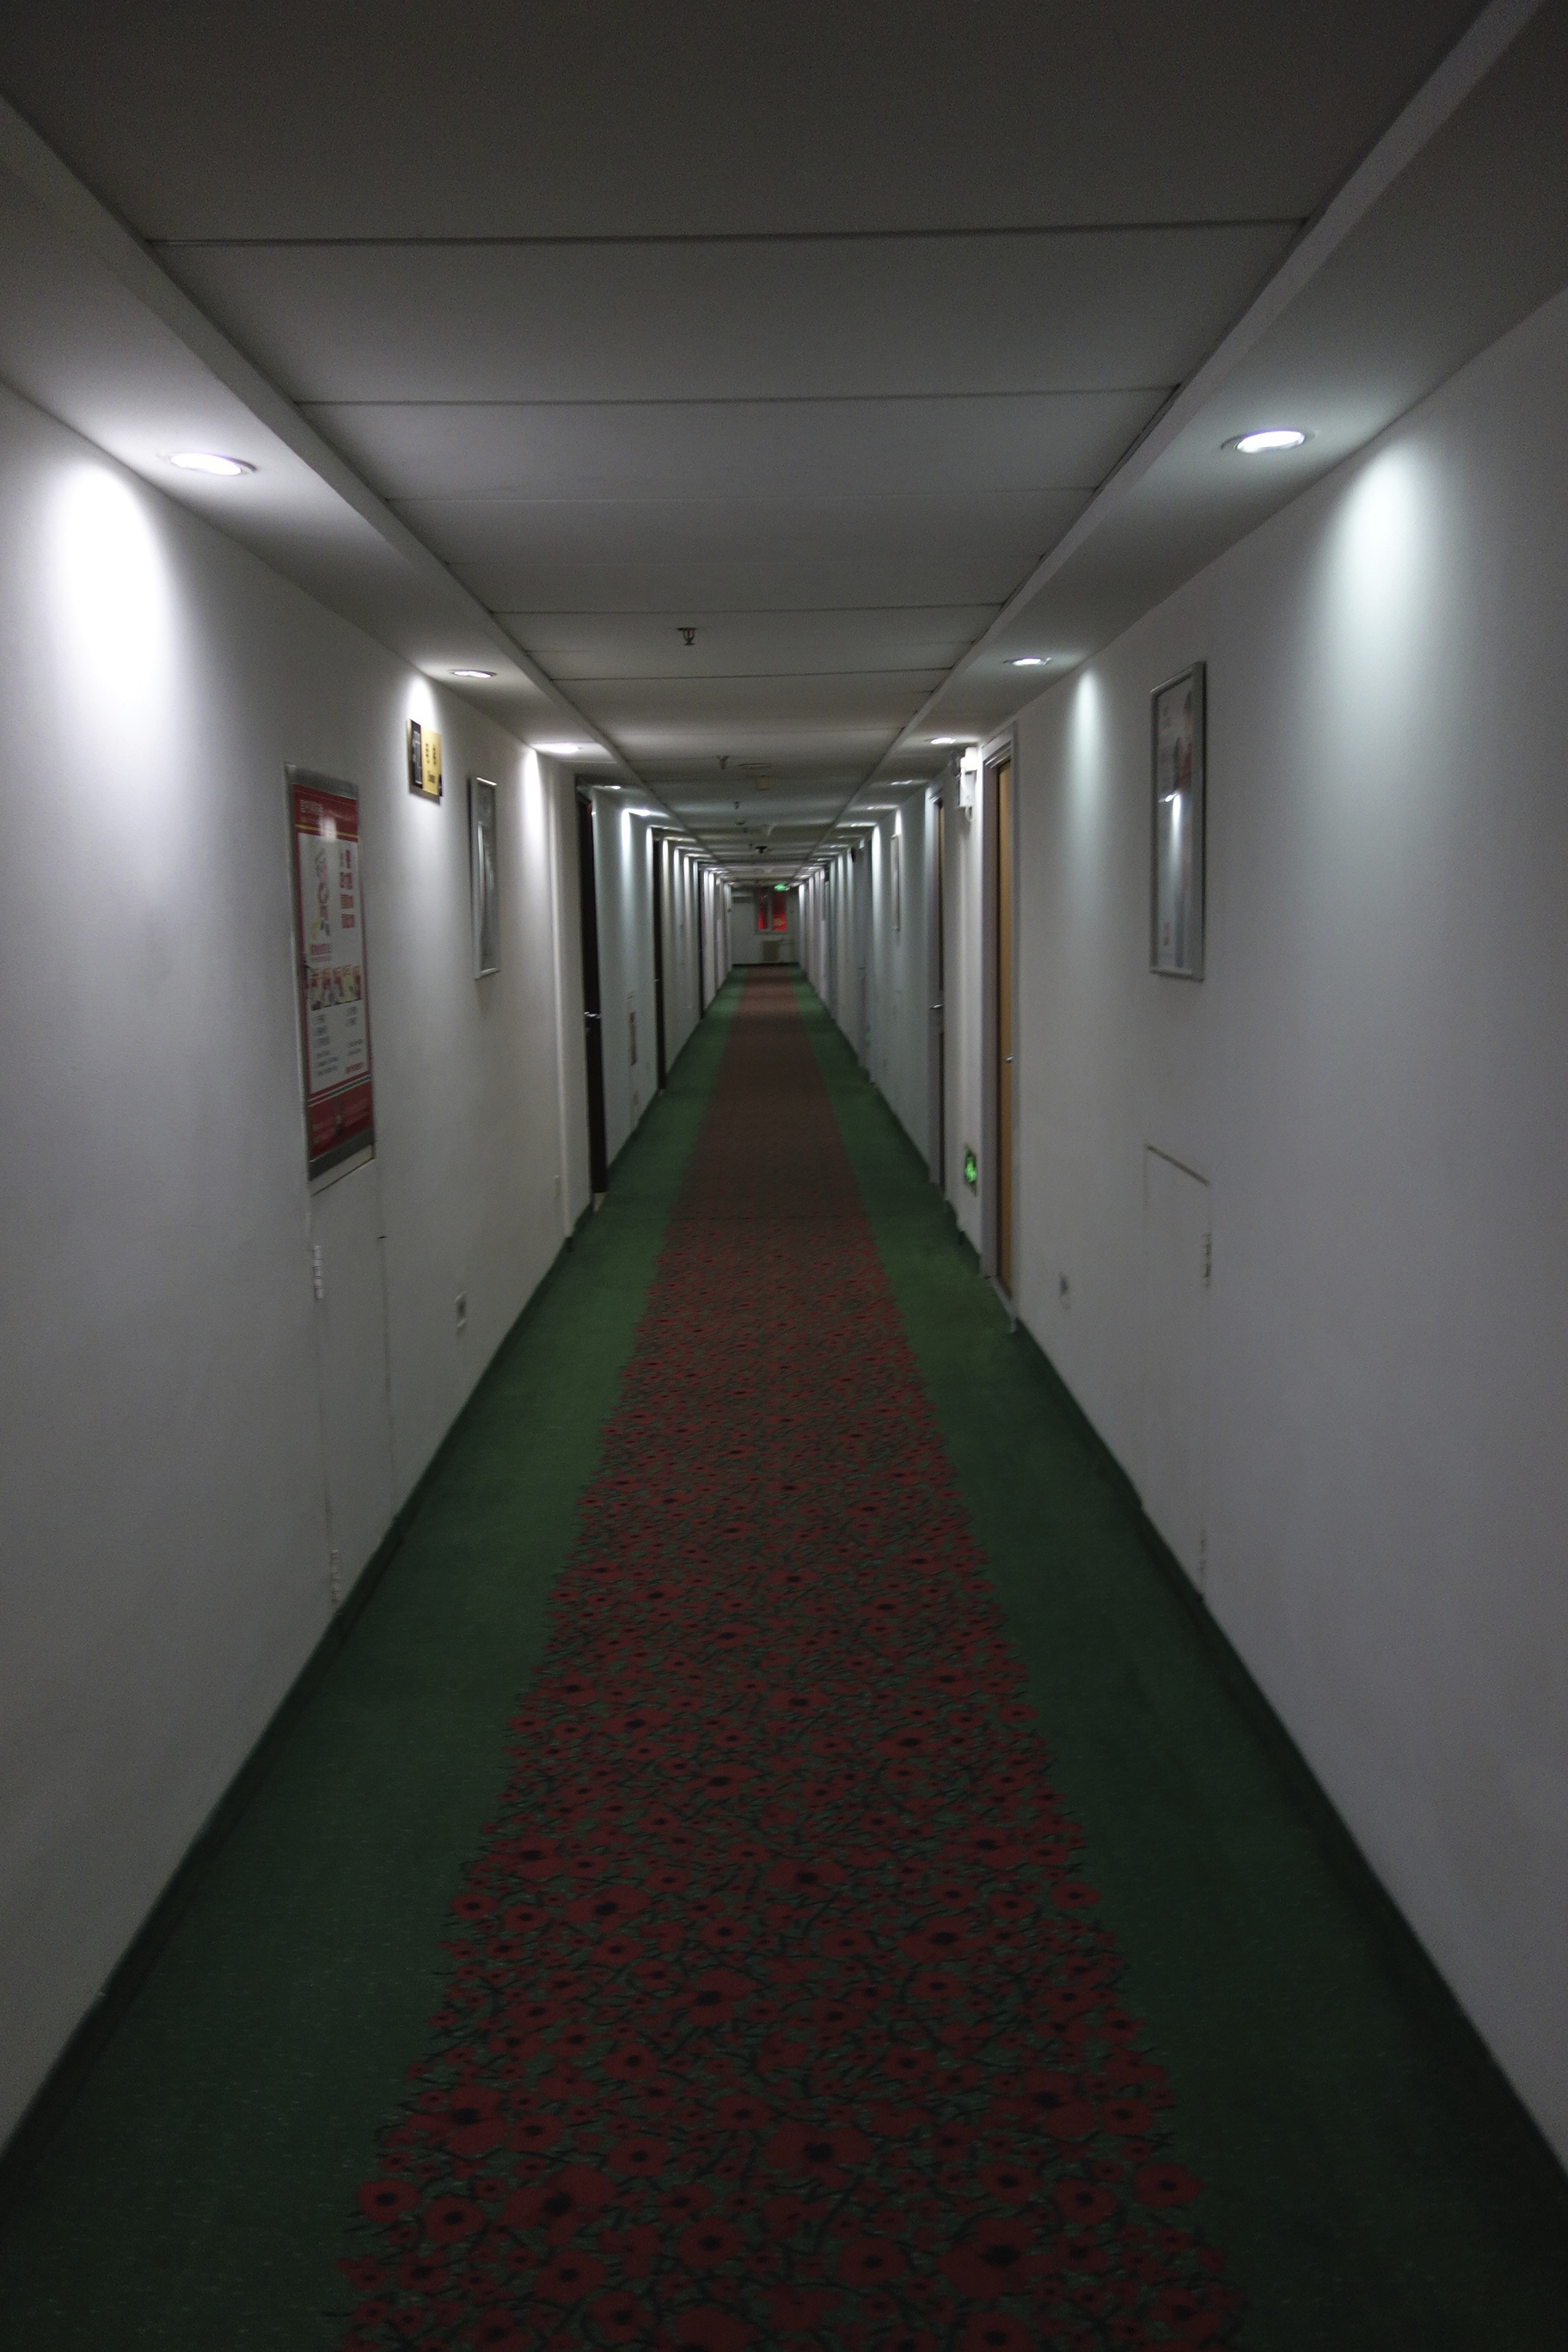 Dingy hallways